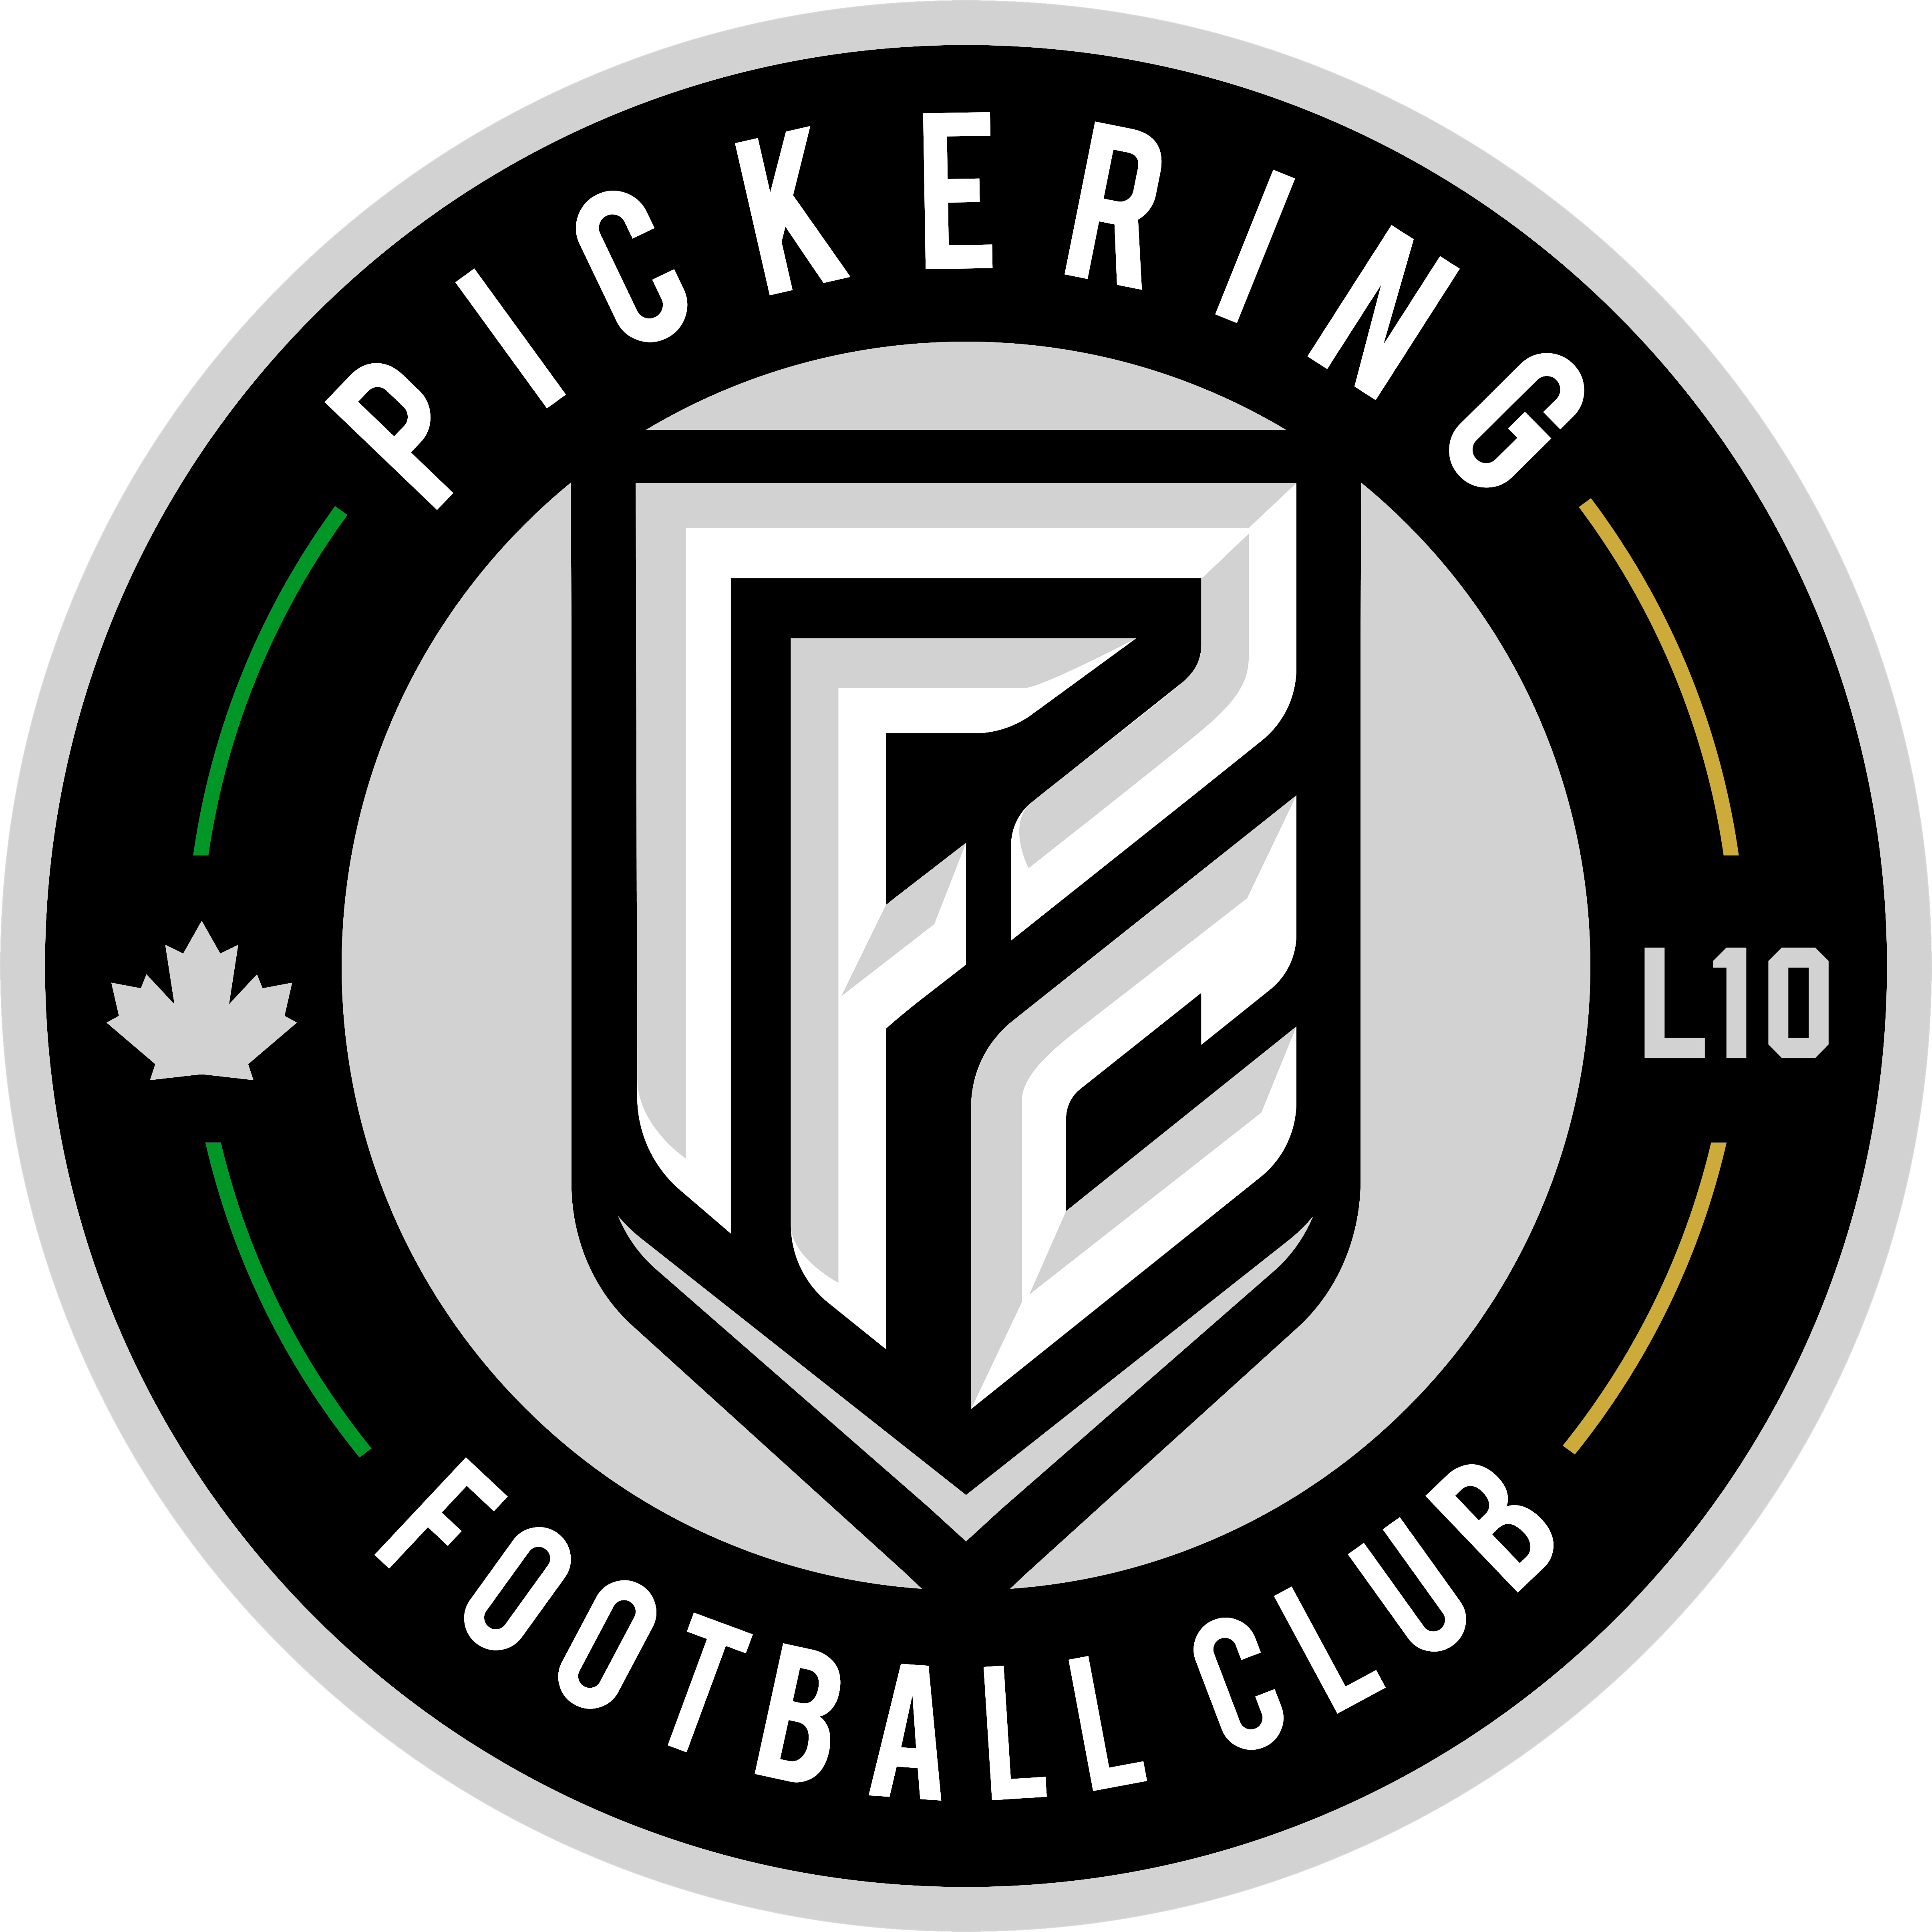 Pickering Football Club L1O